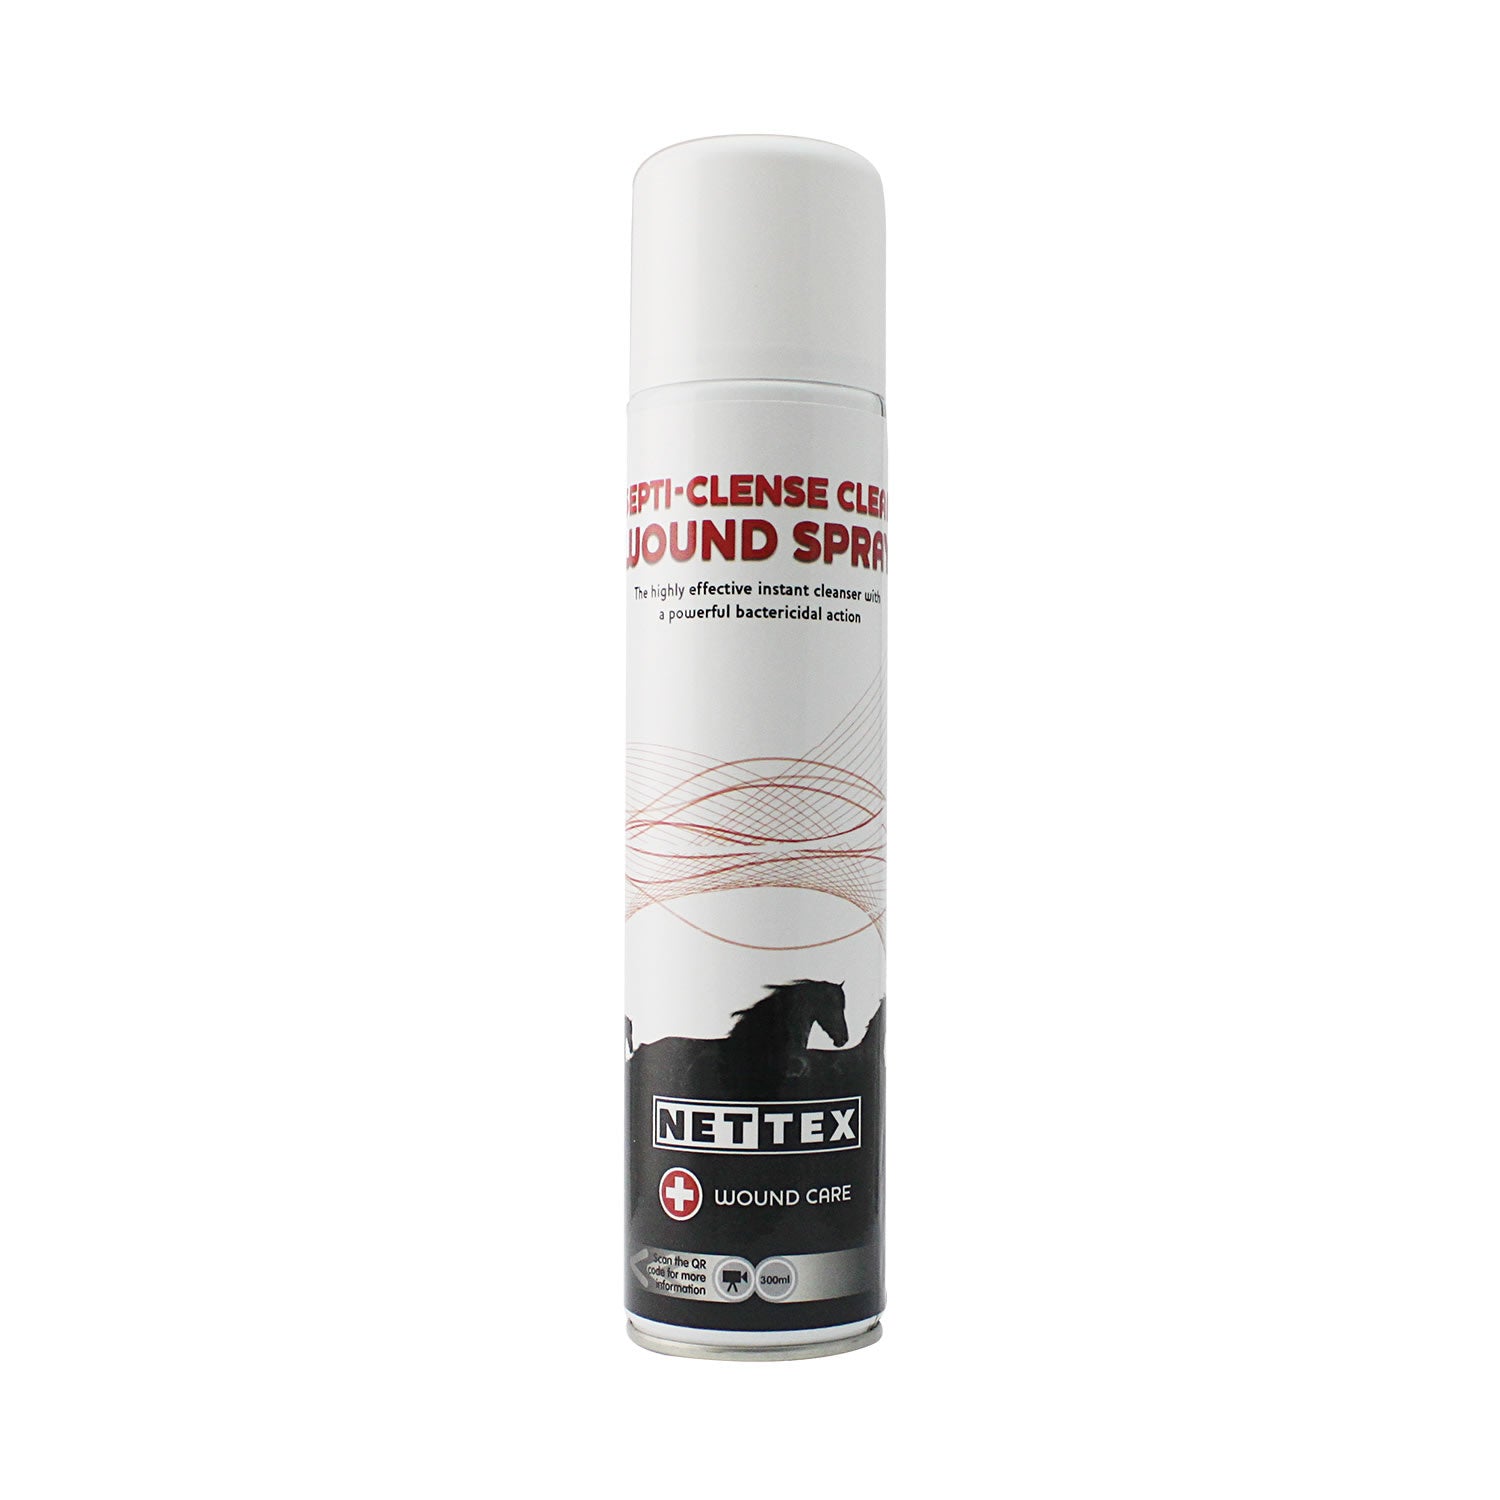 Net-tex Septi-Cleanse Clear Wound Spray 300ml